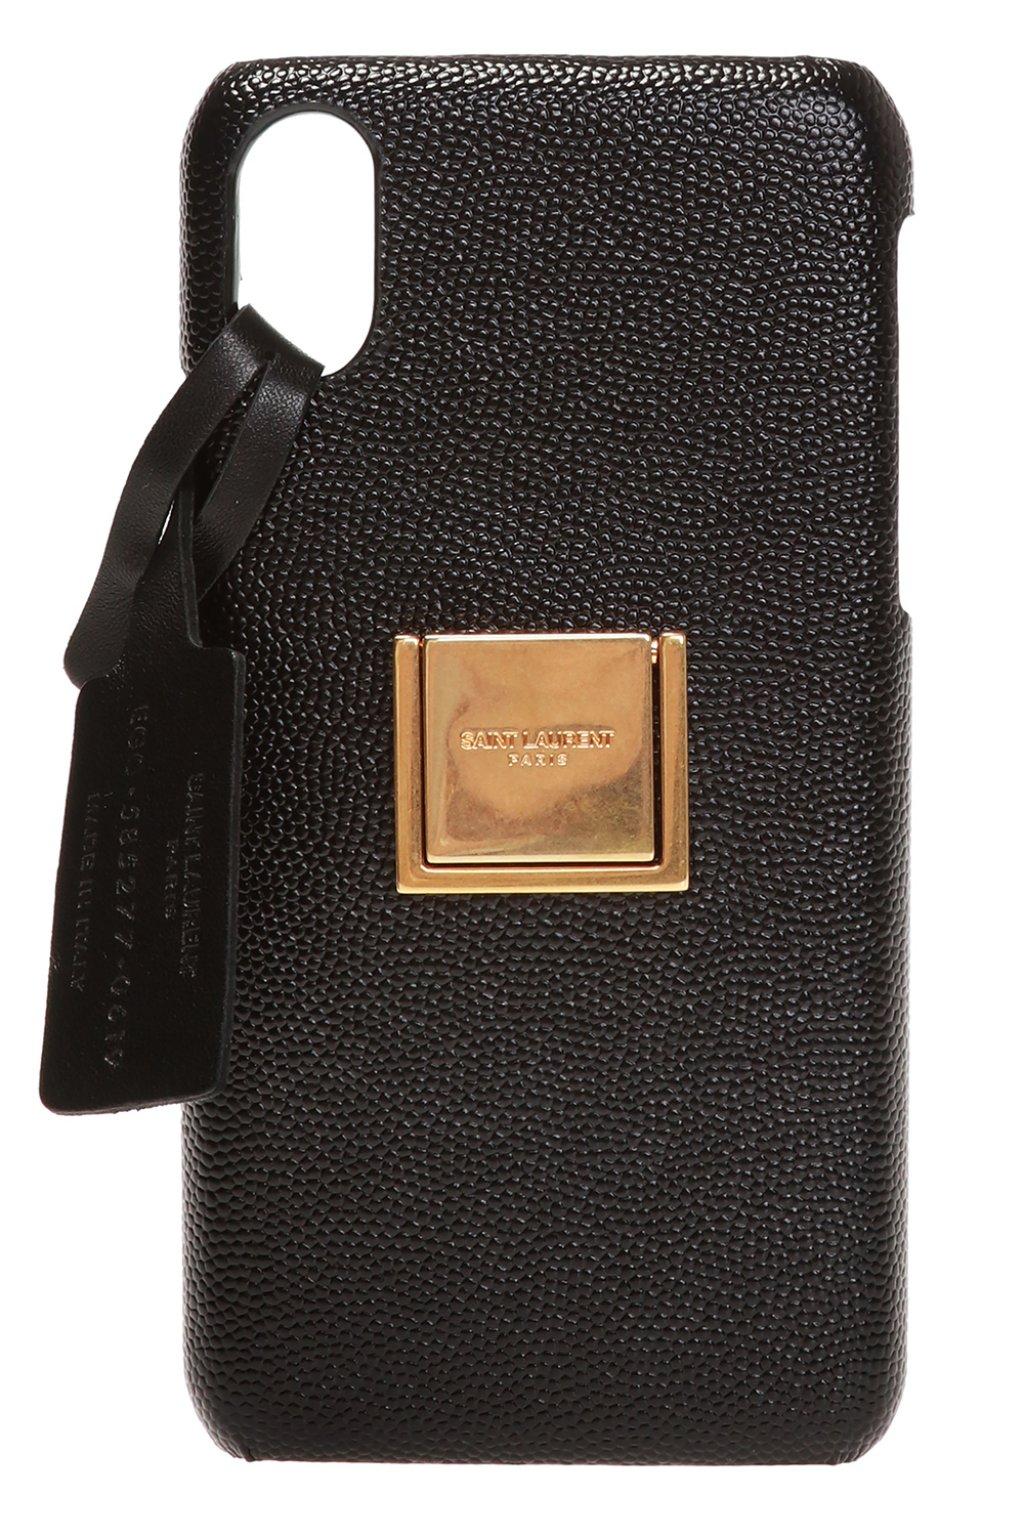 Saint Laurent Leather Iphone X Case in Black for Men - Lyst